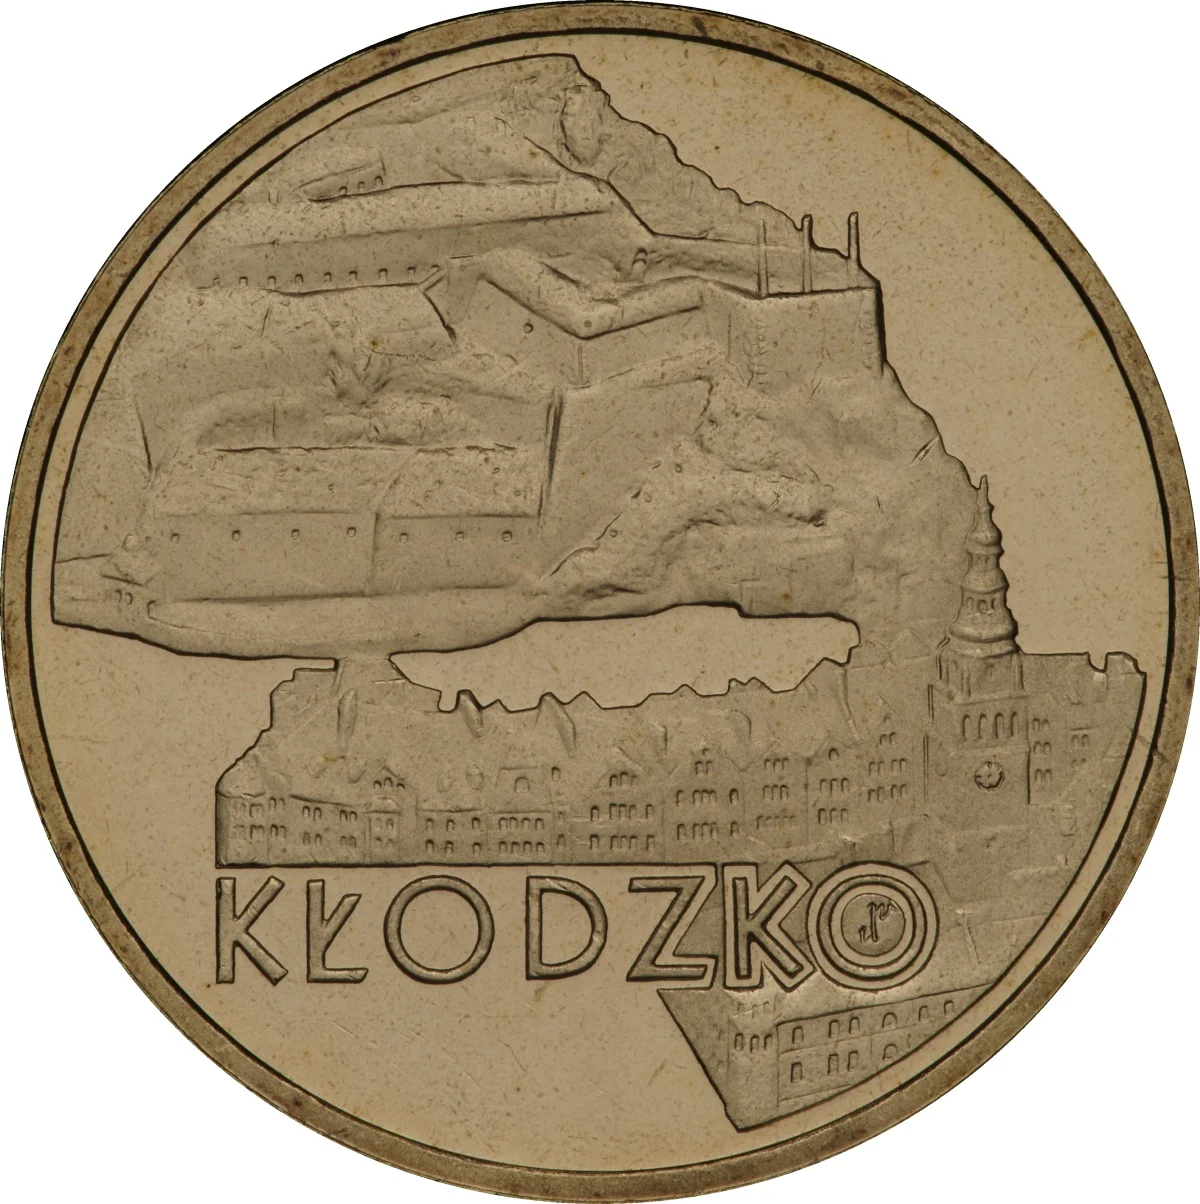 

Poland 2007 City Series-Kvozko 2 Zlotti Circulation Commemorative Coin100% Original